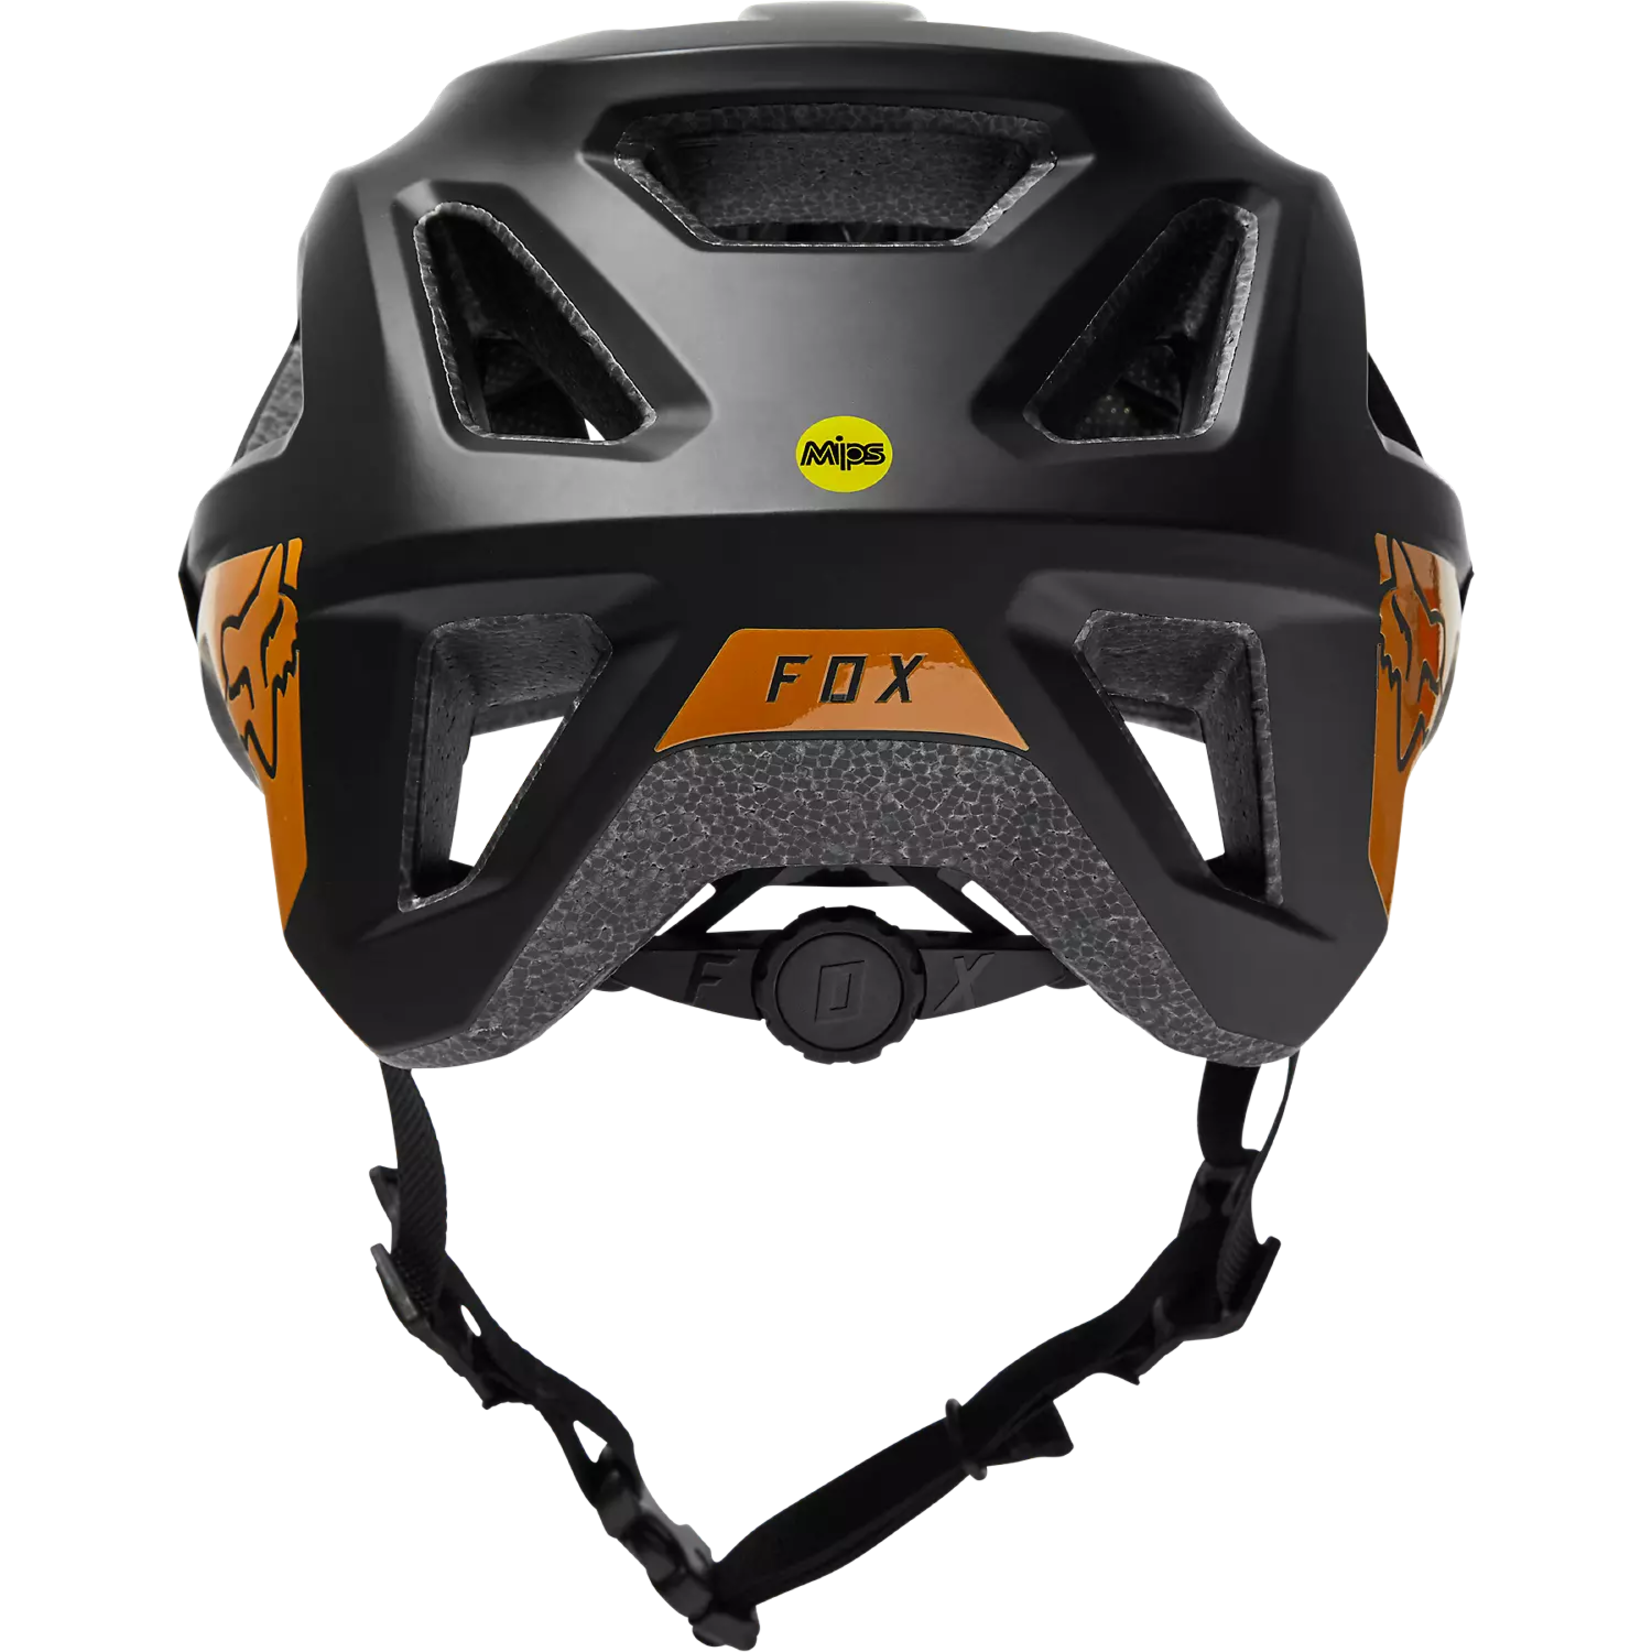 Fox FOX Helmet Mainframe - Black/Gold